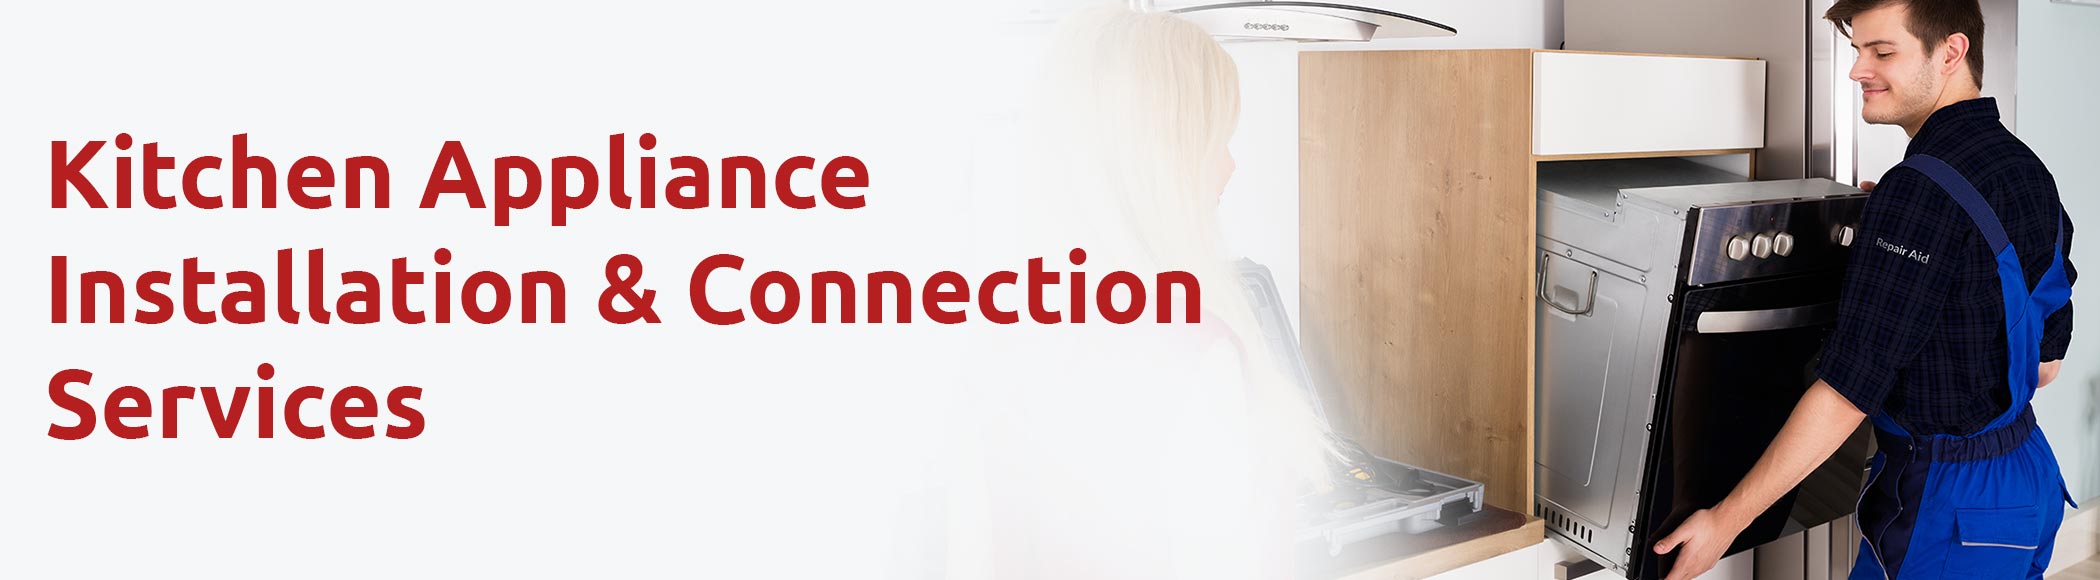 Kitchen Appliance Installation & Connection Services